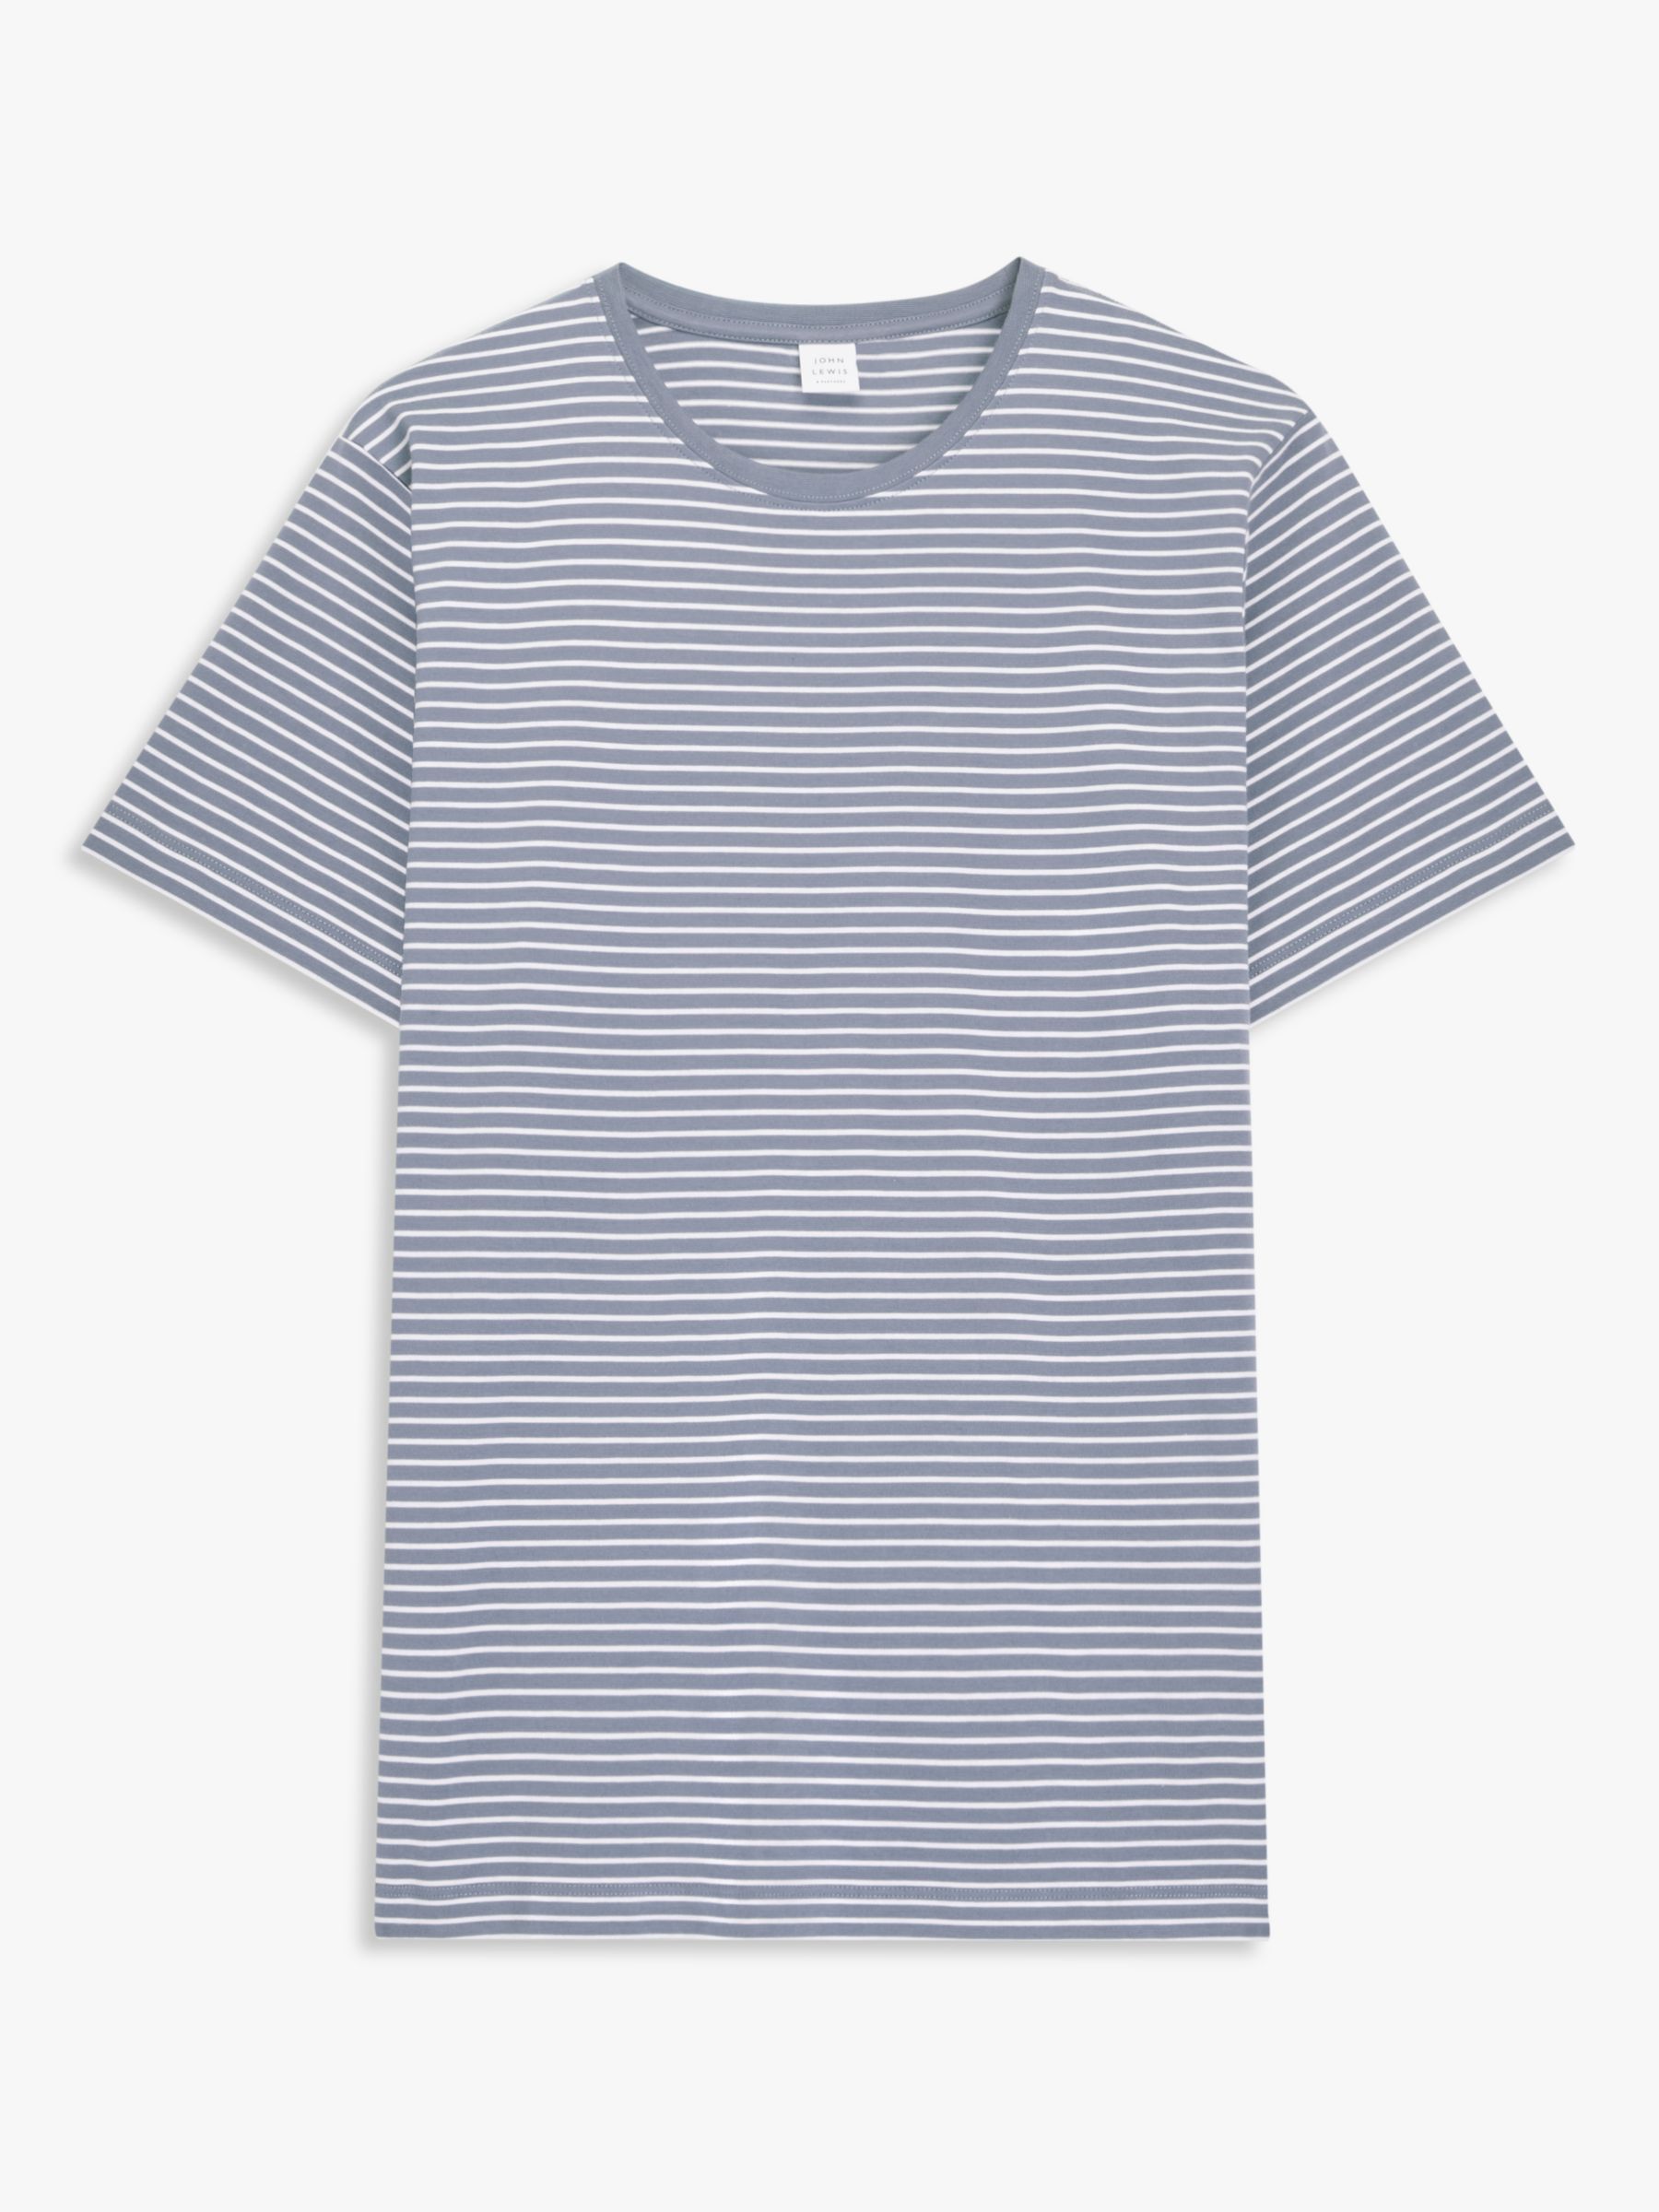 John Lewis Supima Cotton Fine Stripe T-Shirt, Denim Melange/White, S